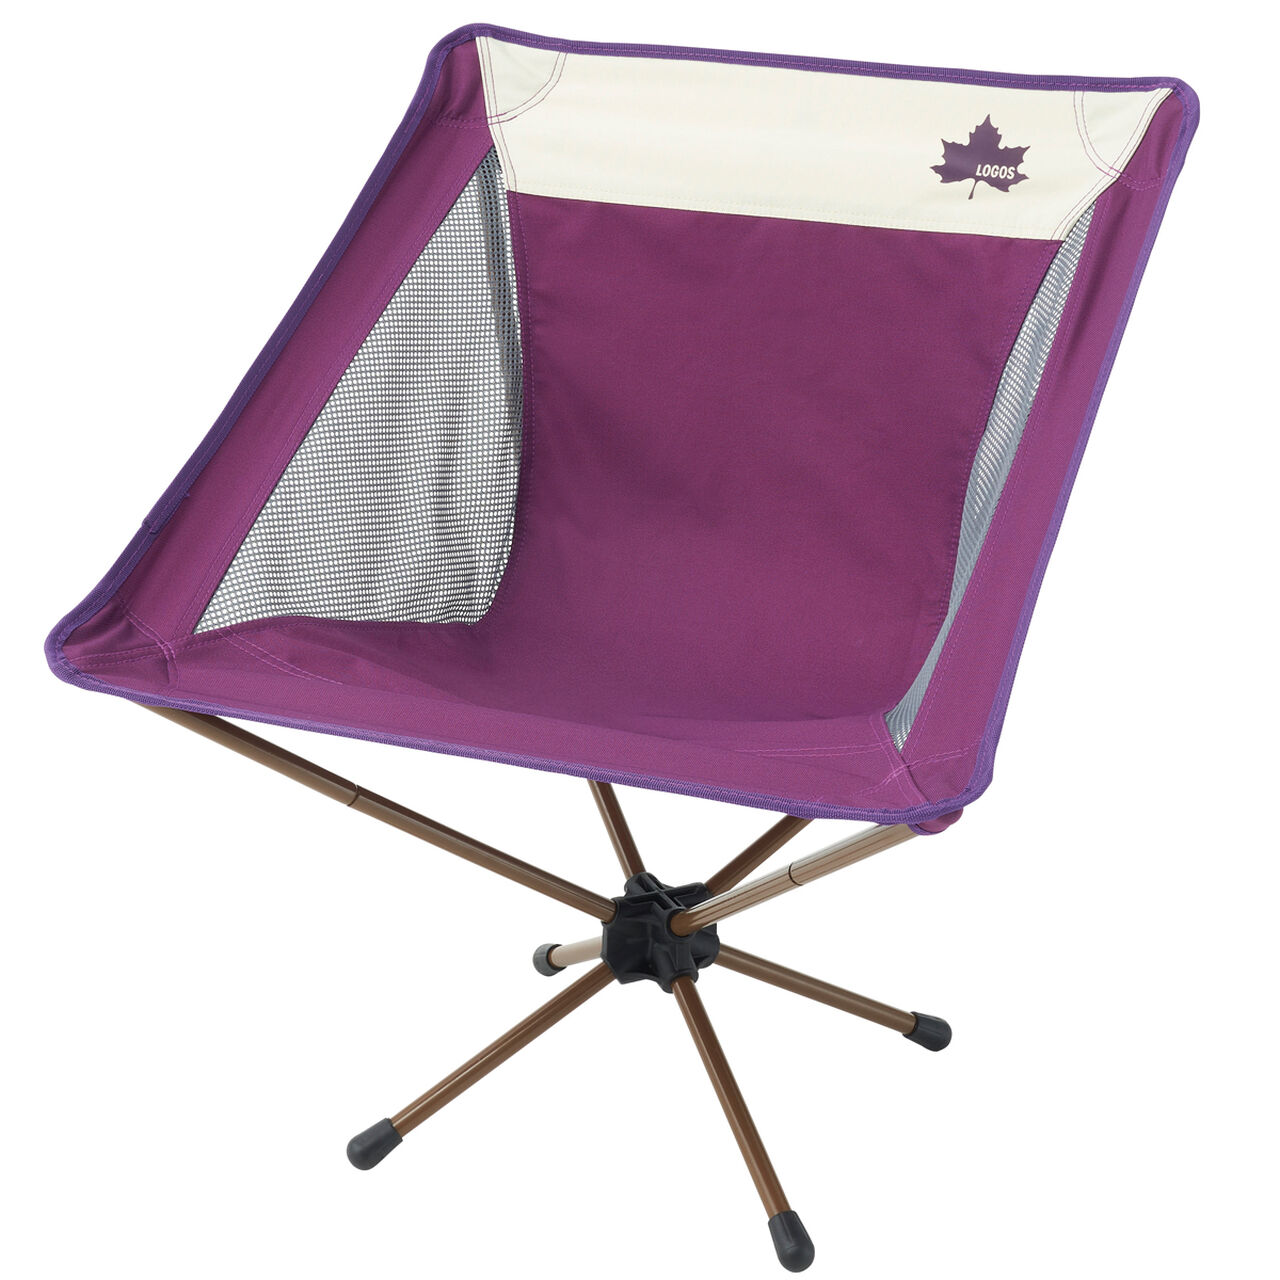 LOGOS Life Bucket Chair (Colorful Logos),Purple, large image number 0